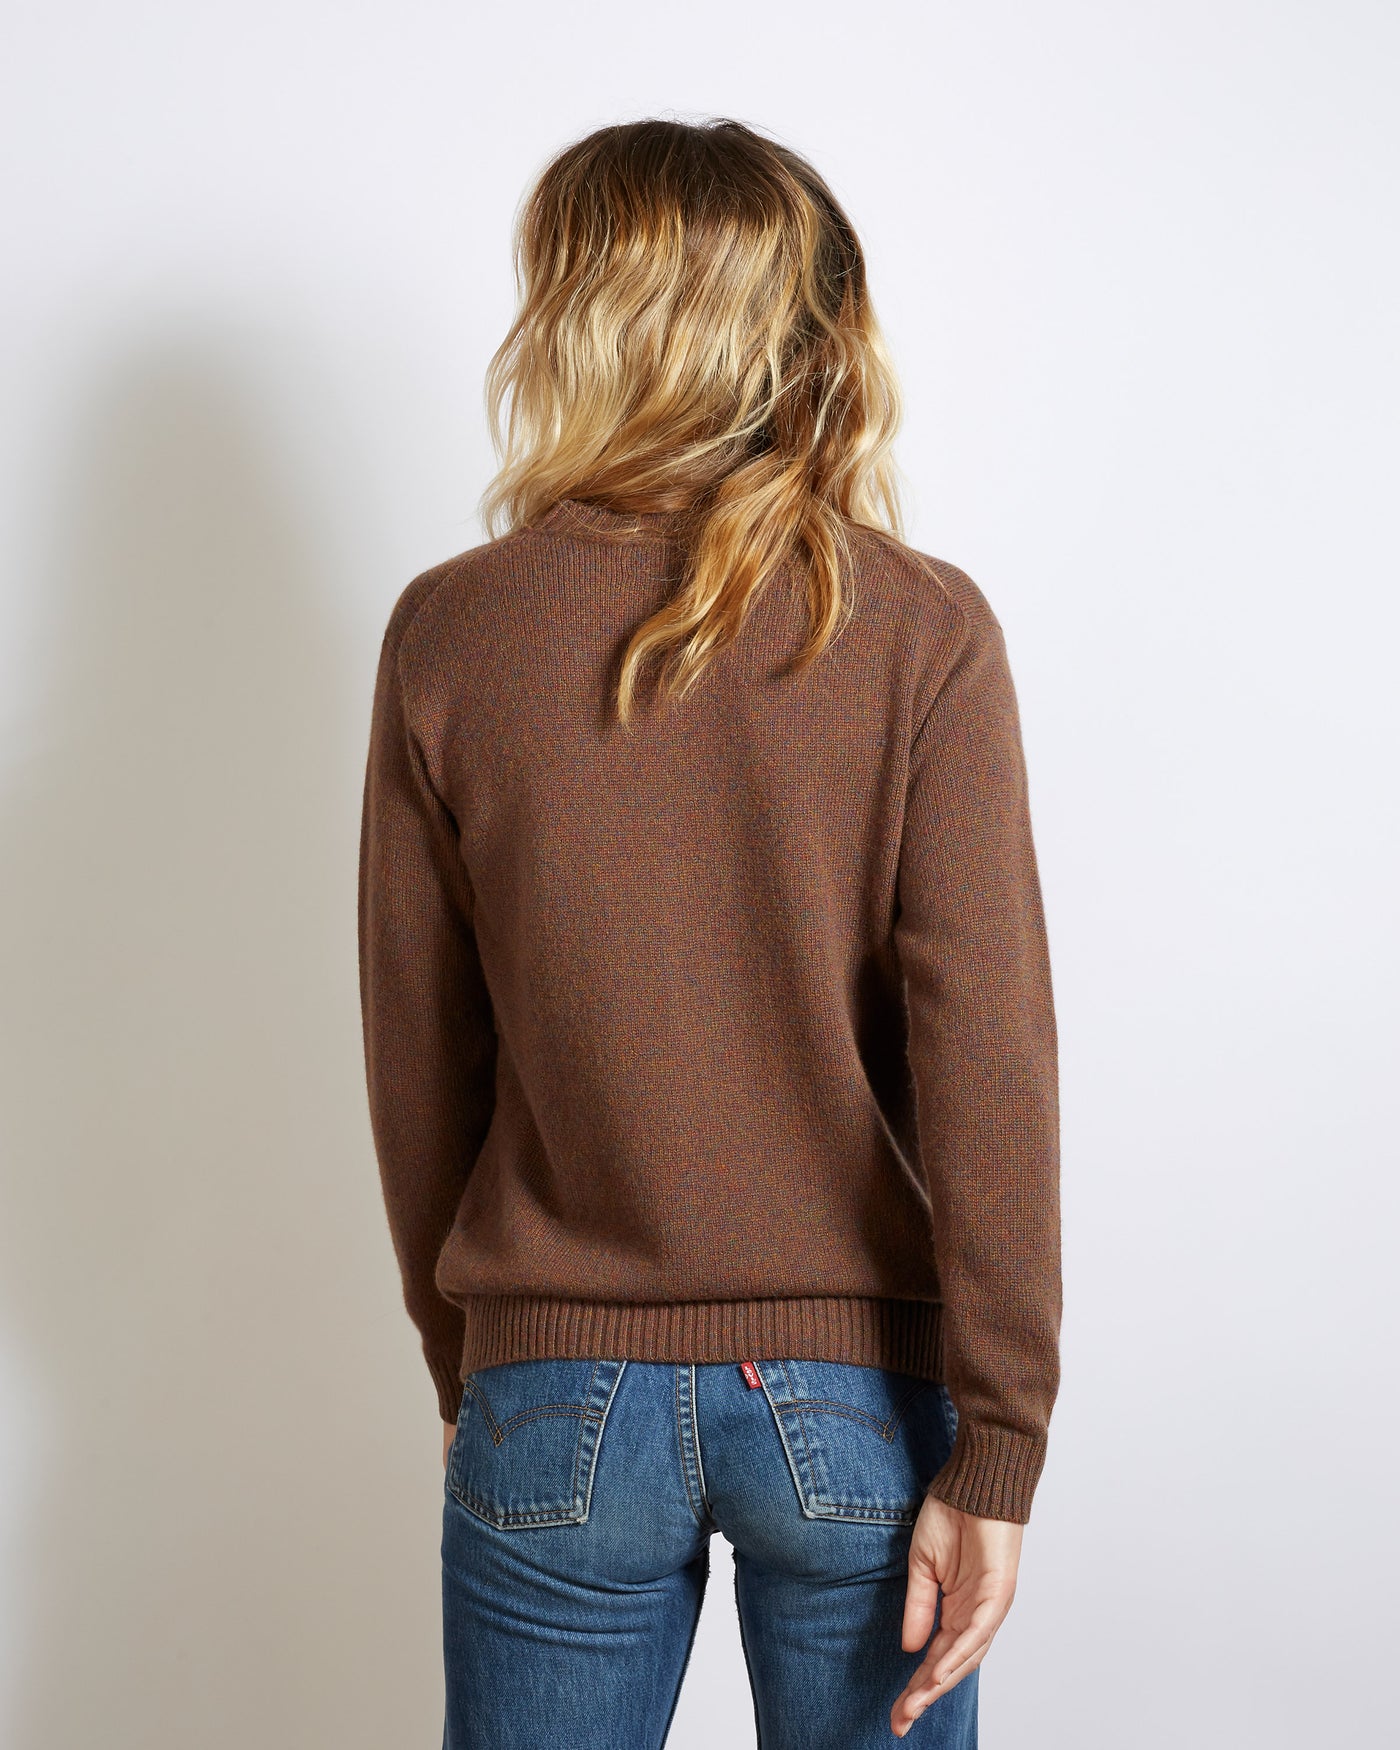 Pull sweater jumper 100% cachemire cashmere 